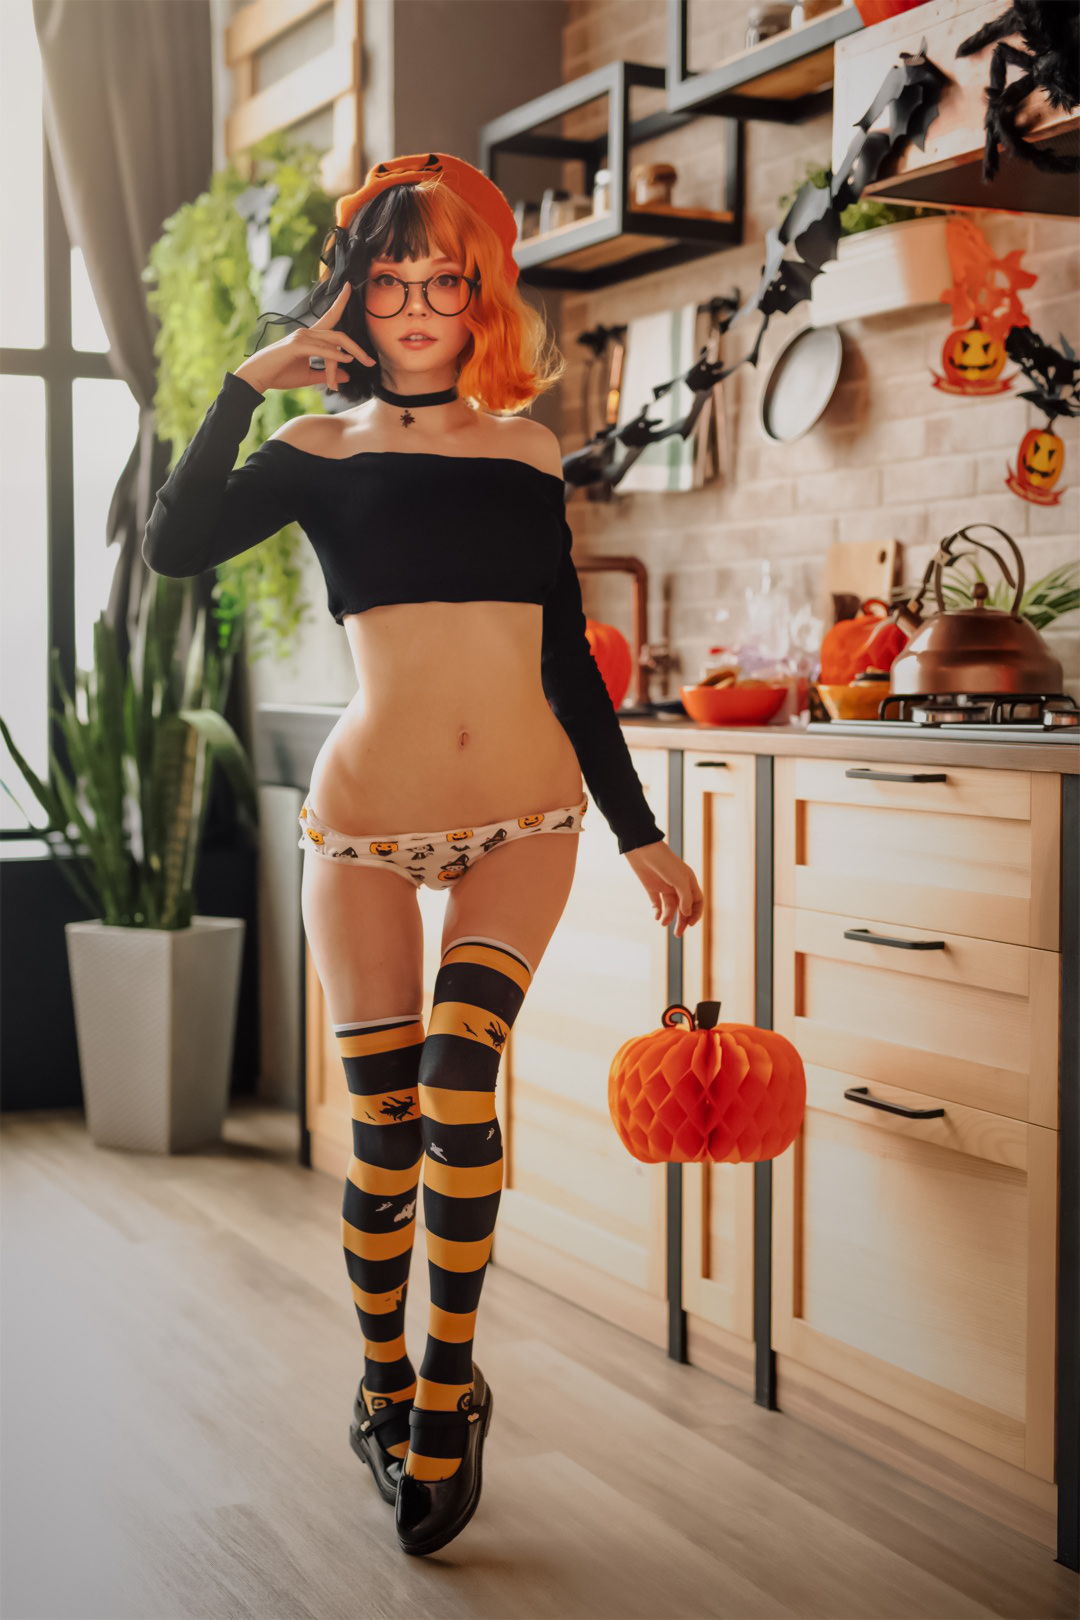 People 1080x1620 Alisa Bishop women dyed hair orange black clothing stripes kitchen plants Halloween bare shoulders the gap